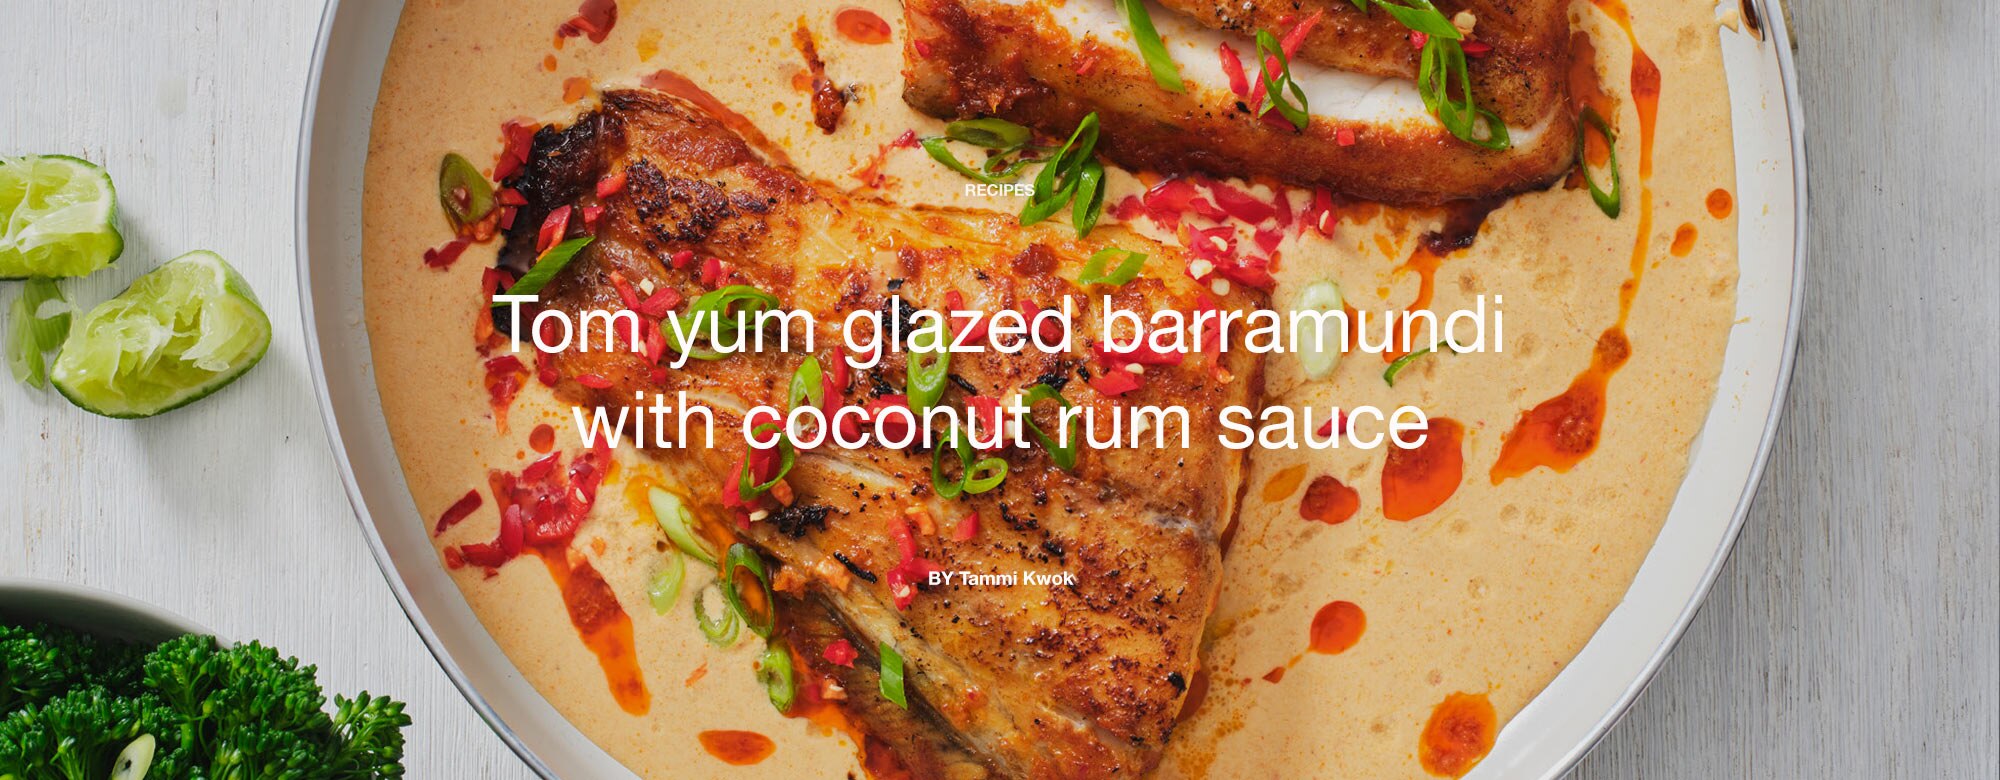 Tom yum glazed barramundi with coconut rum sauce